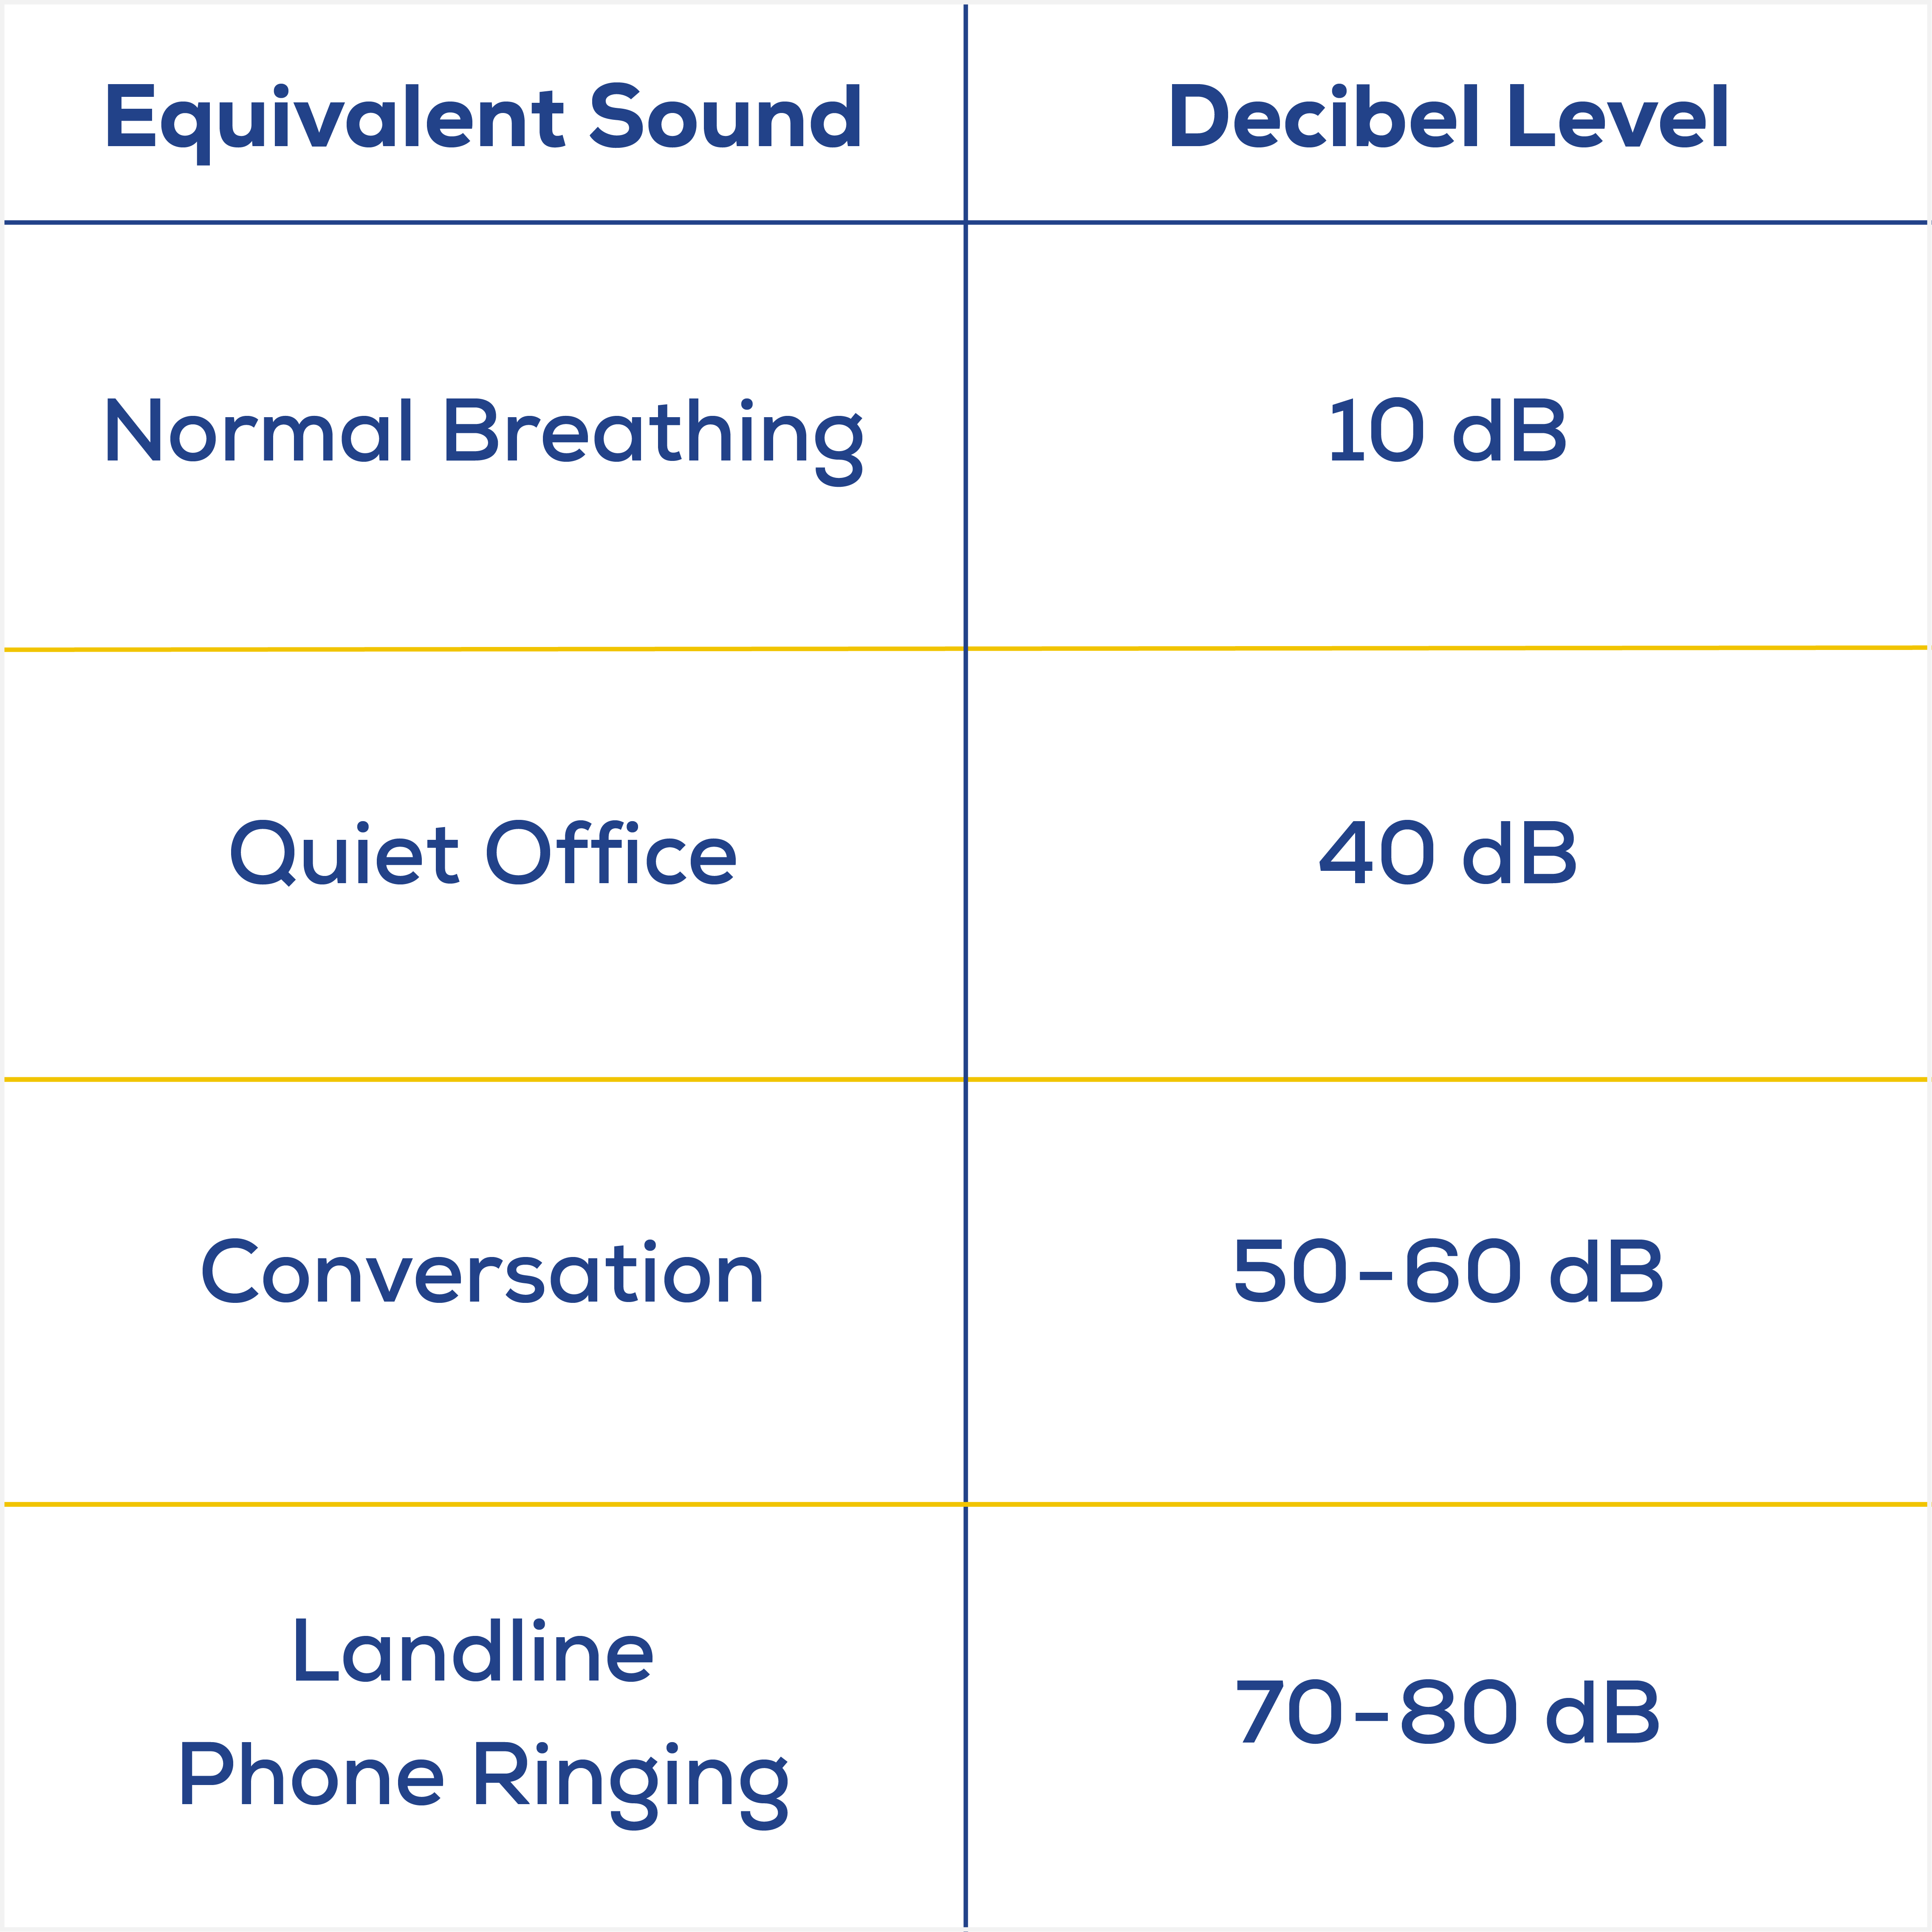 Sound and decibel level